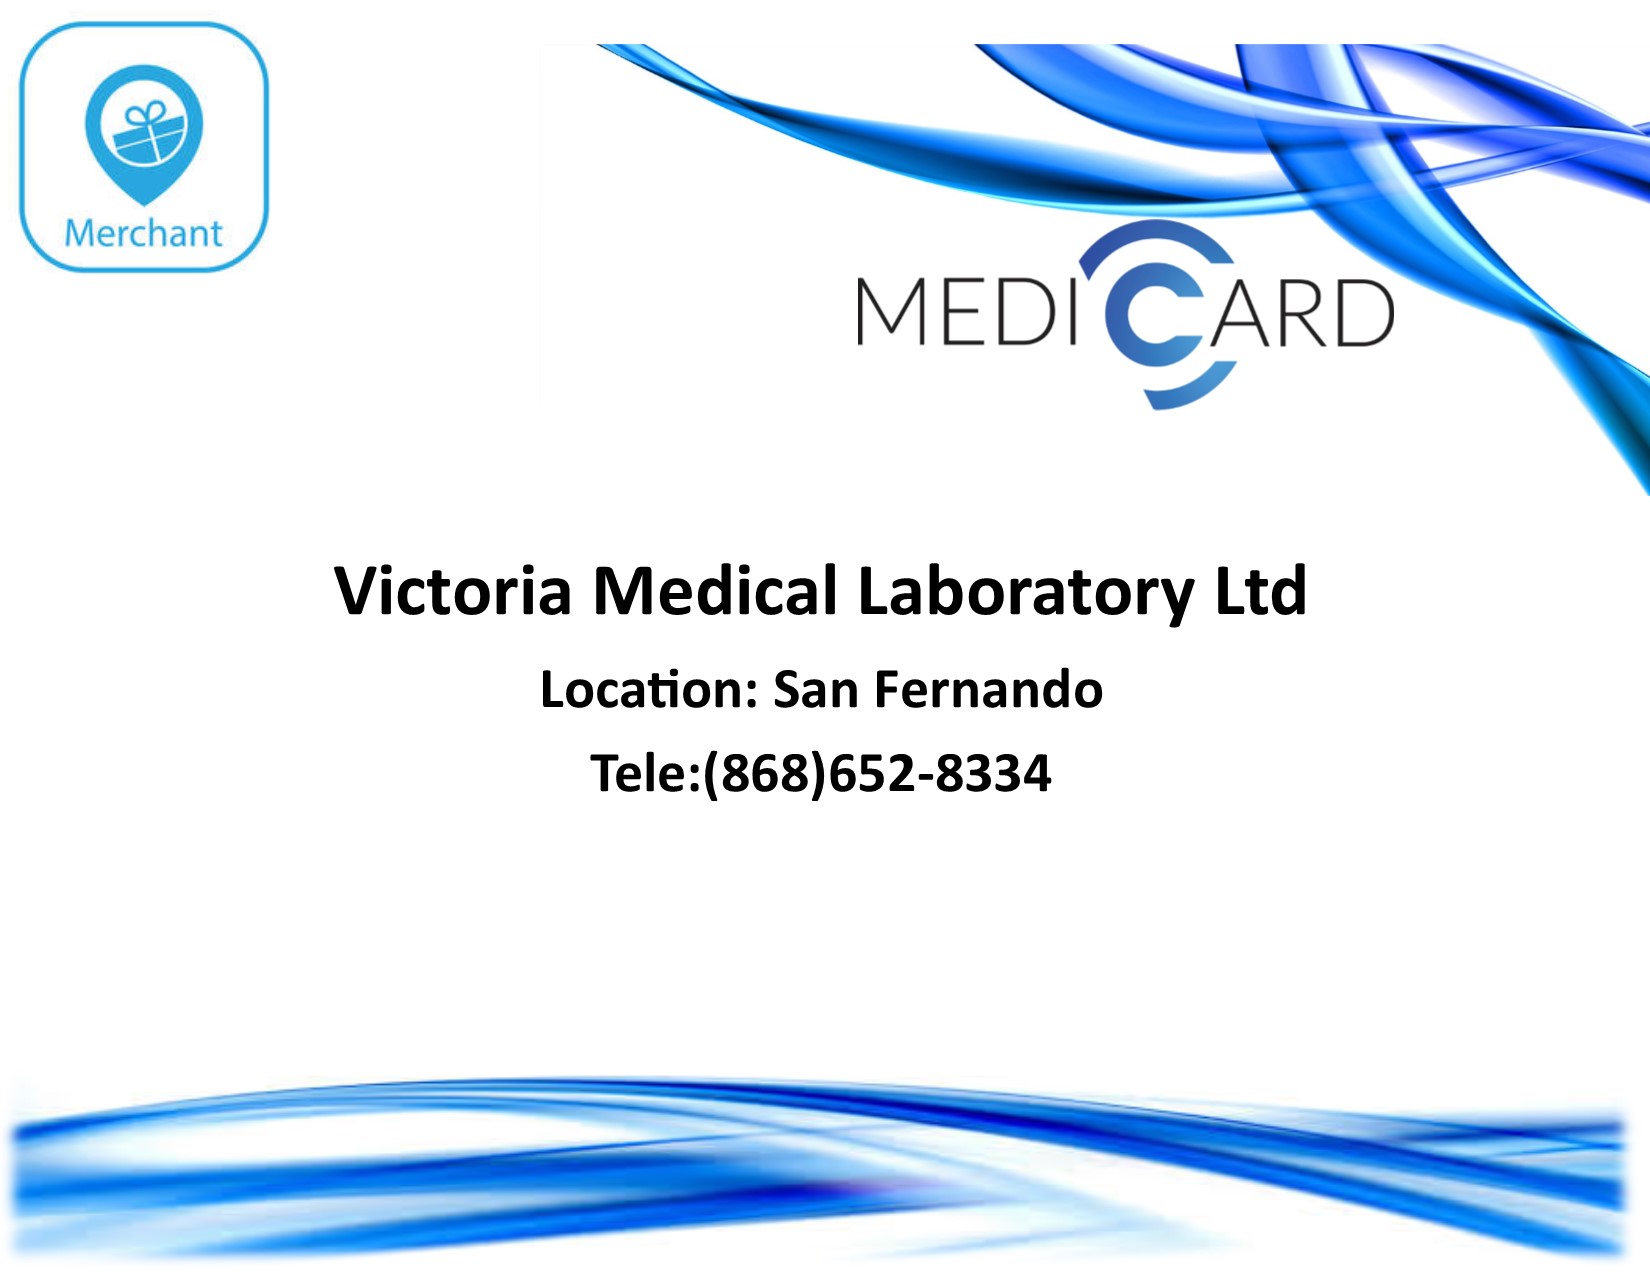 Victoria Medical Laboratory Limited